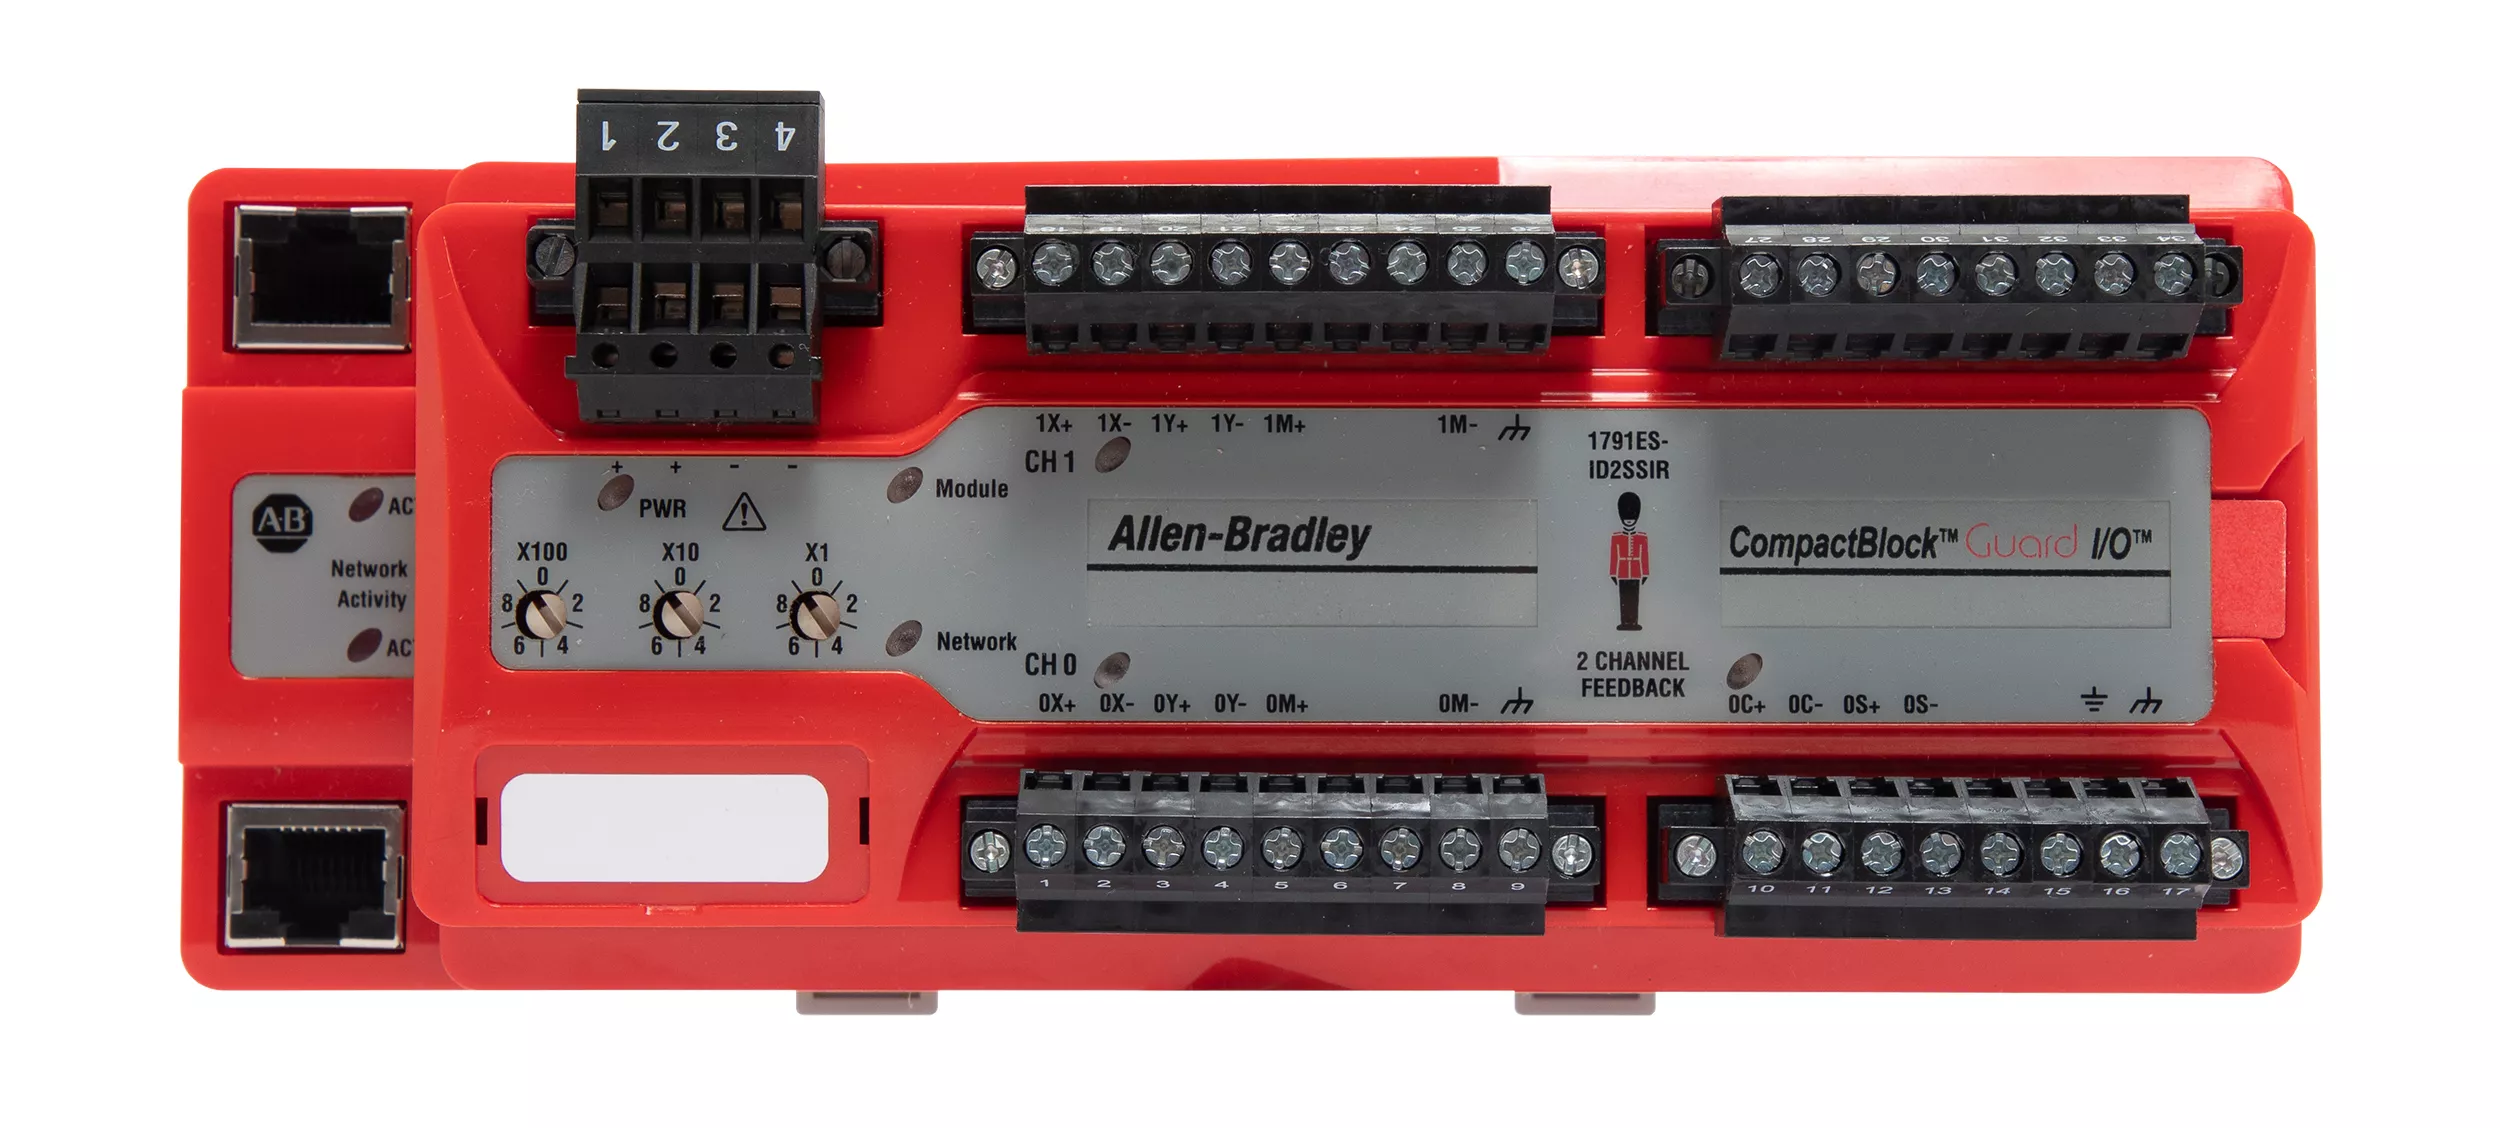 ALLEN BRADLEY 1791DS-IB12 DEVICENET SAFETY COMPACTBLOCK INPUT MODULE